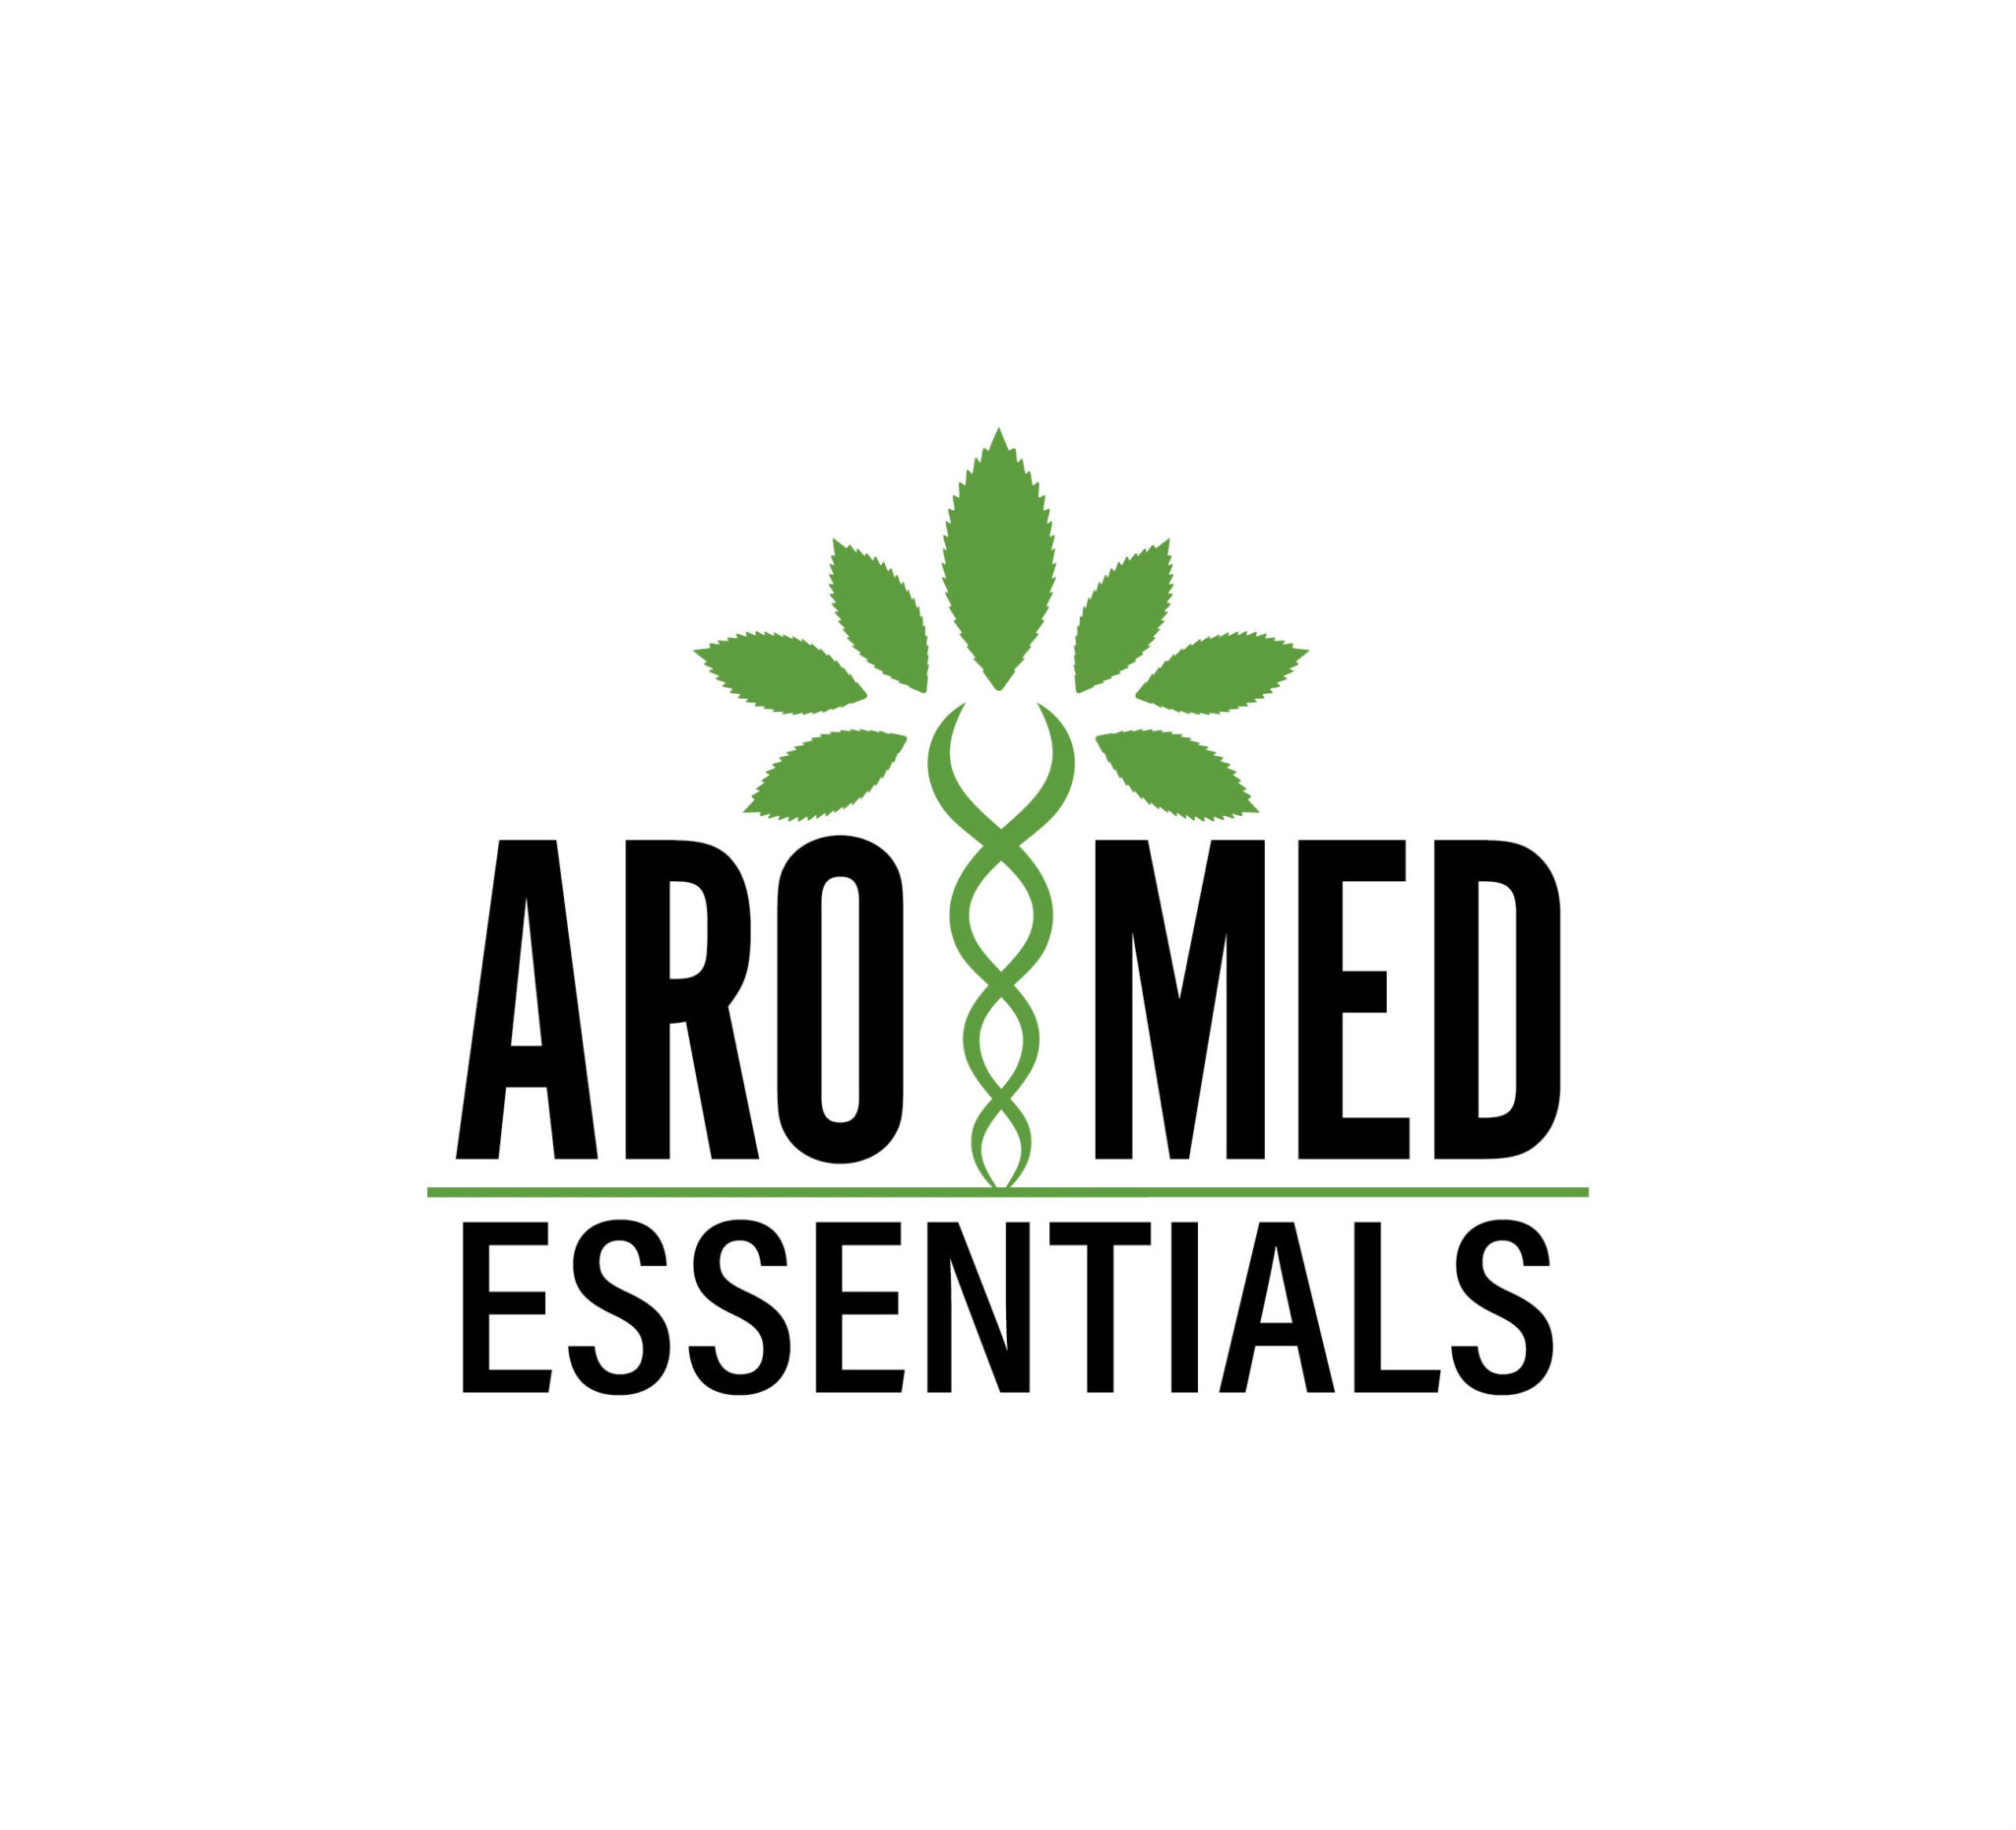 aromed aromatherapy logo